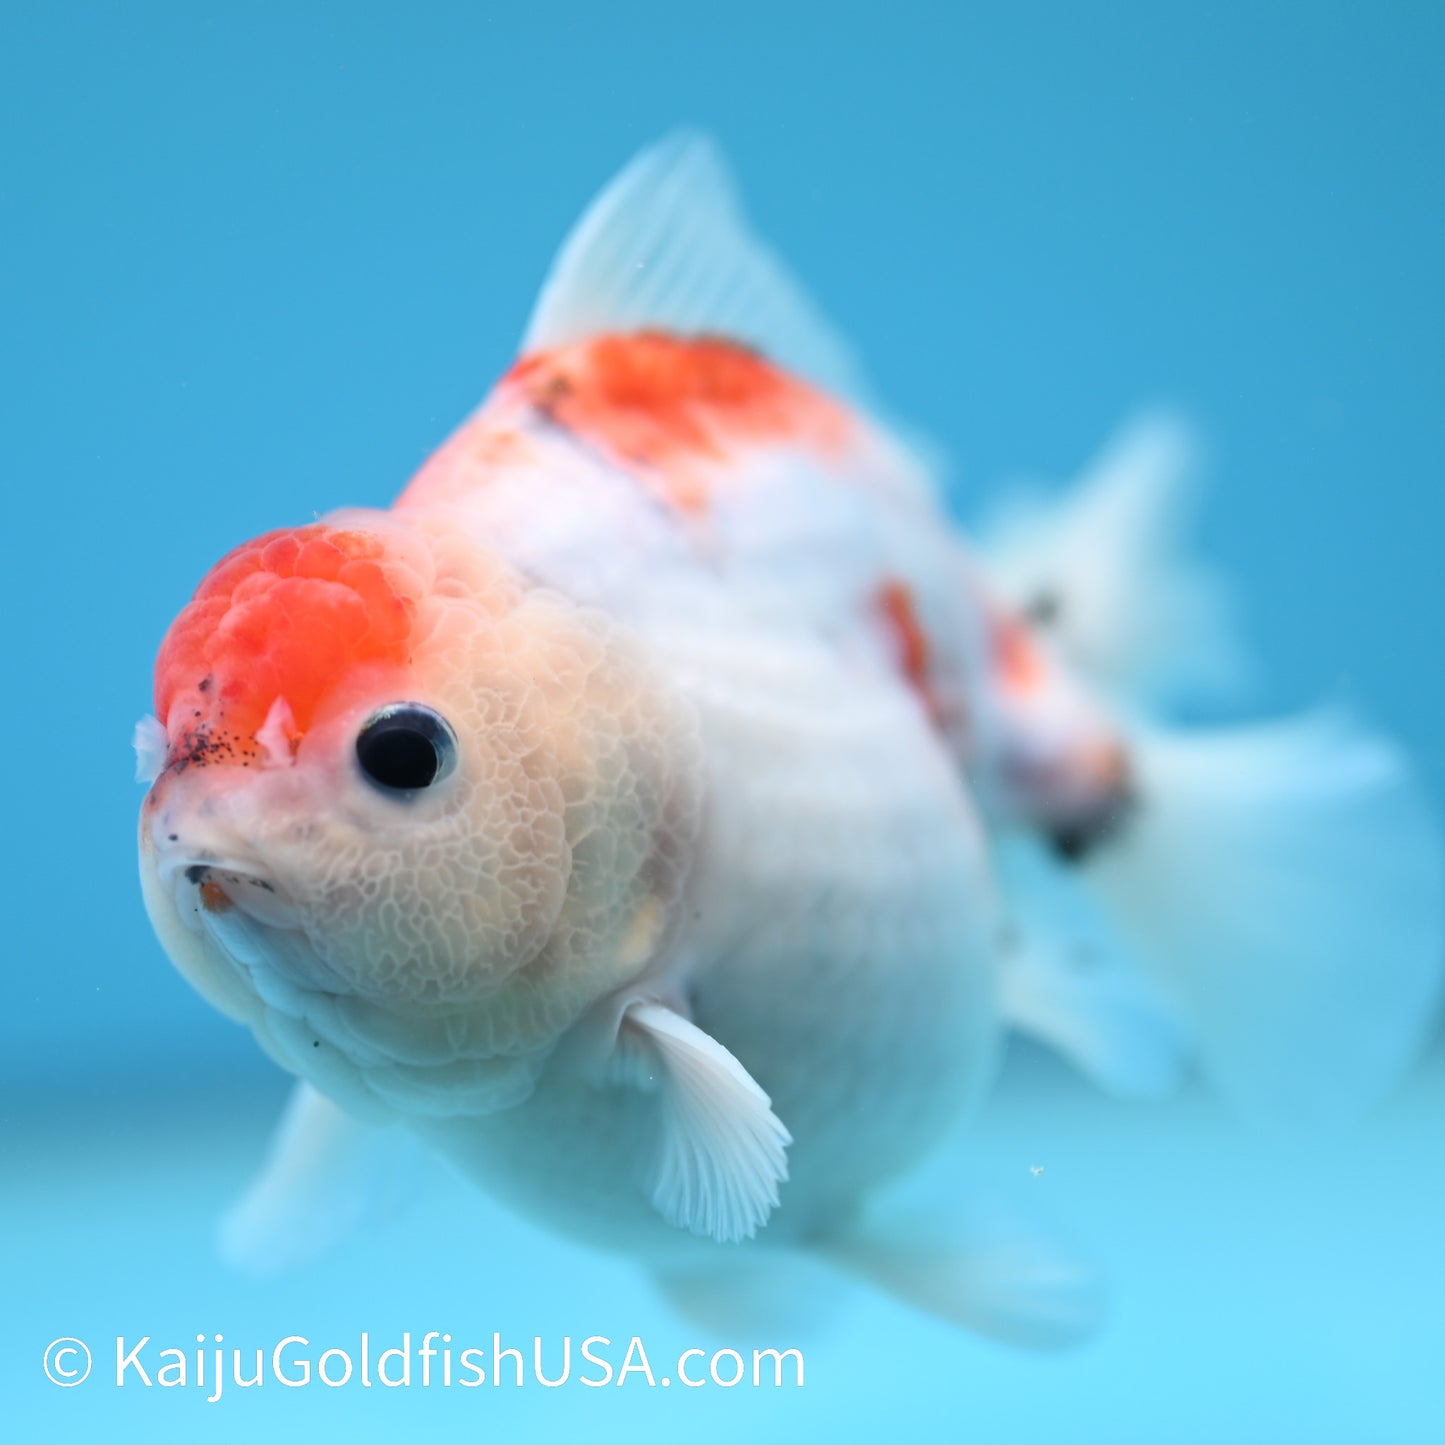 Tricolor Sakura YuanBao 3.5-4 inches (240209_OR02) - Kaiju Goldfish USA